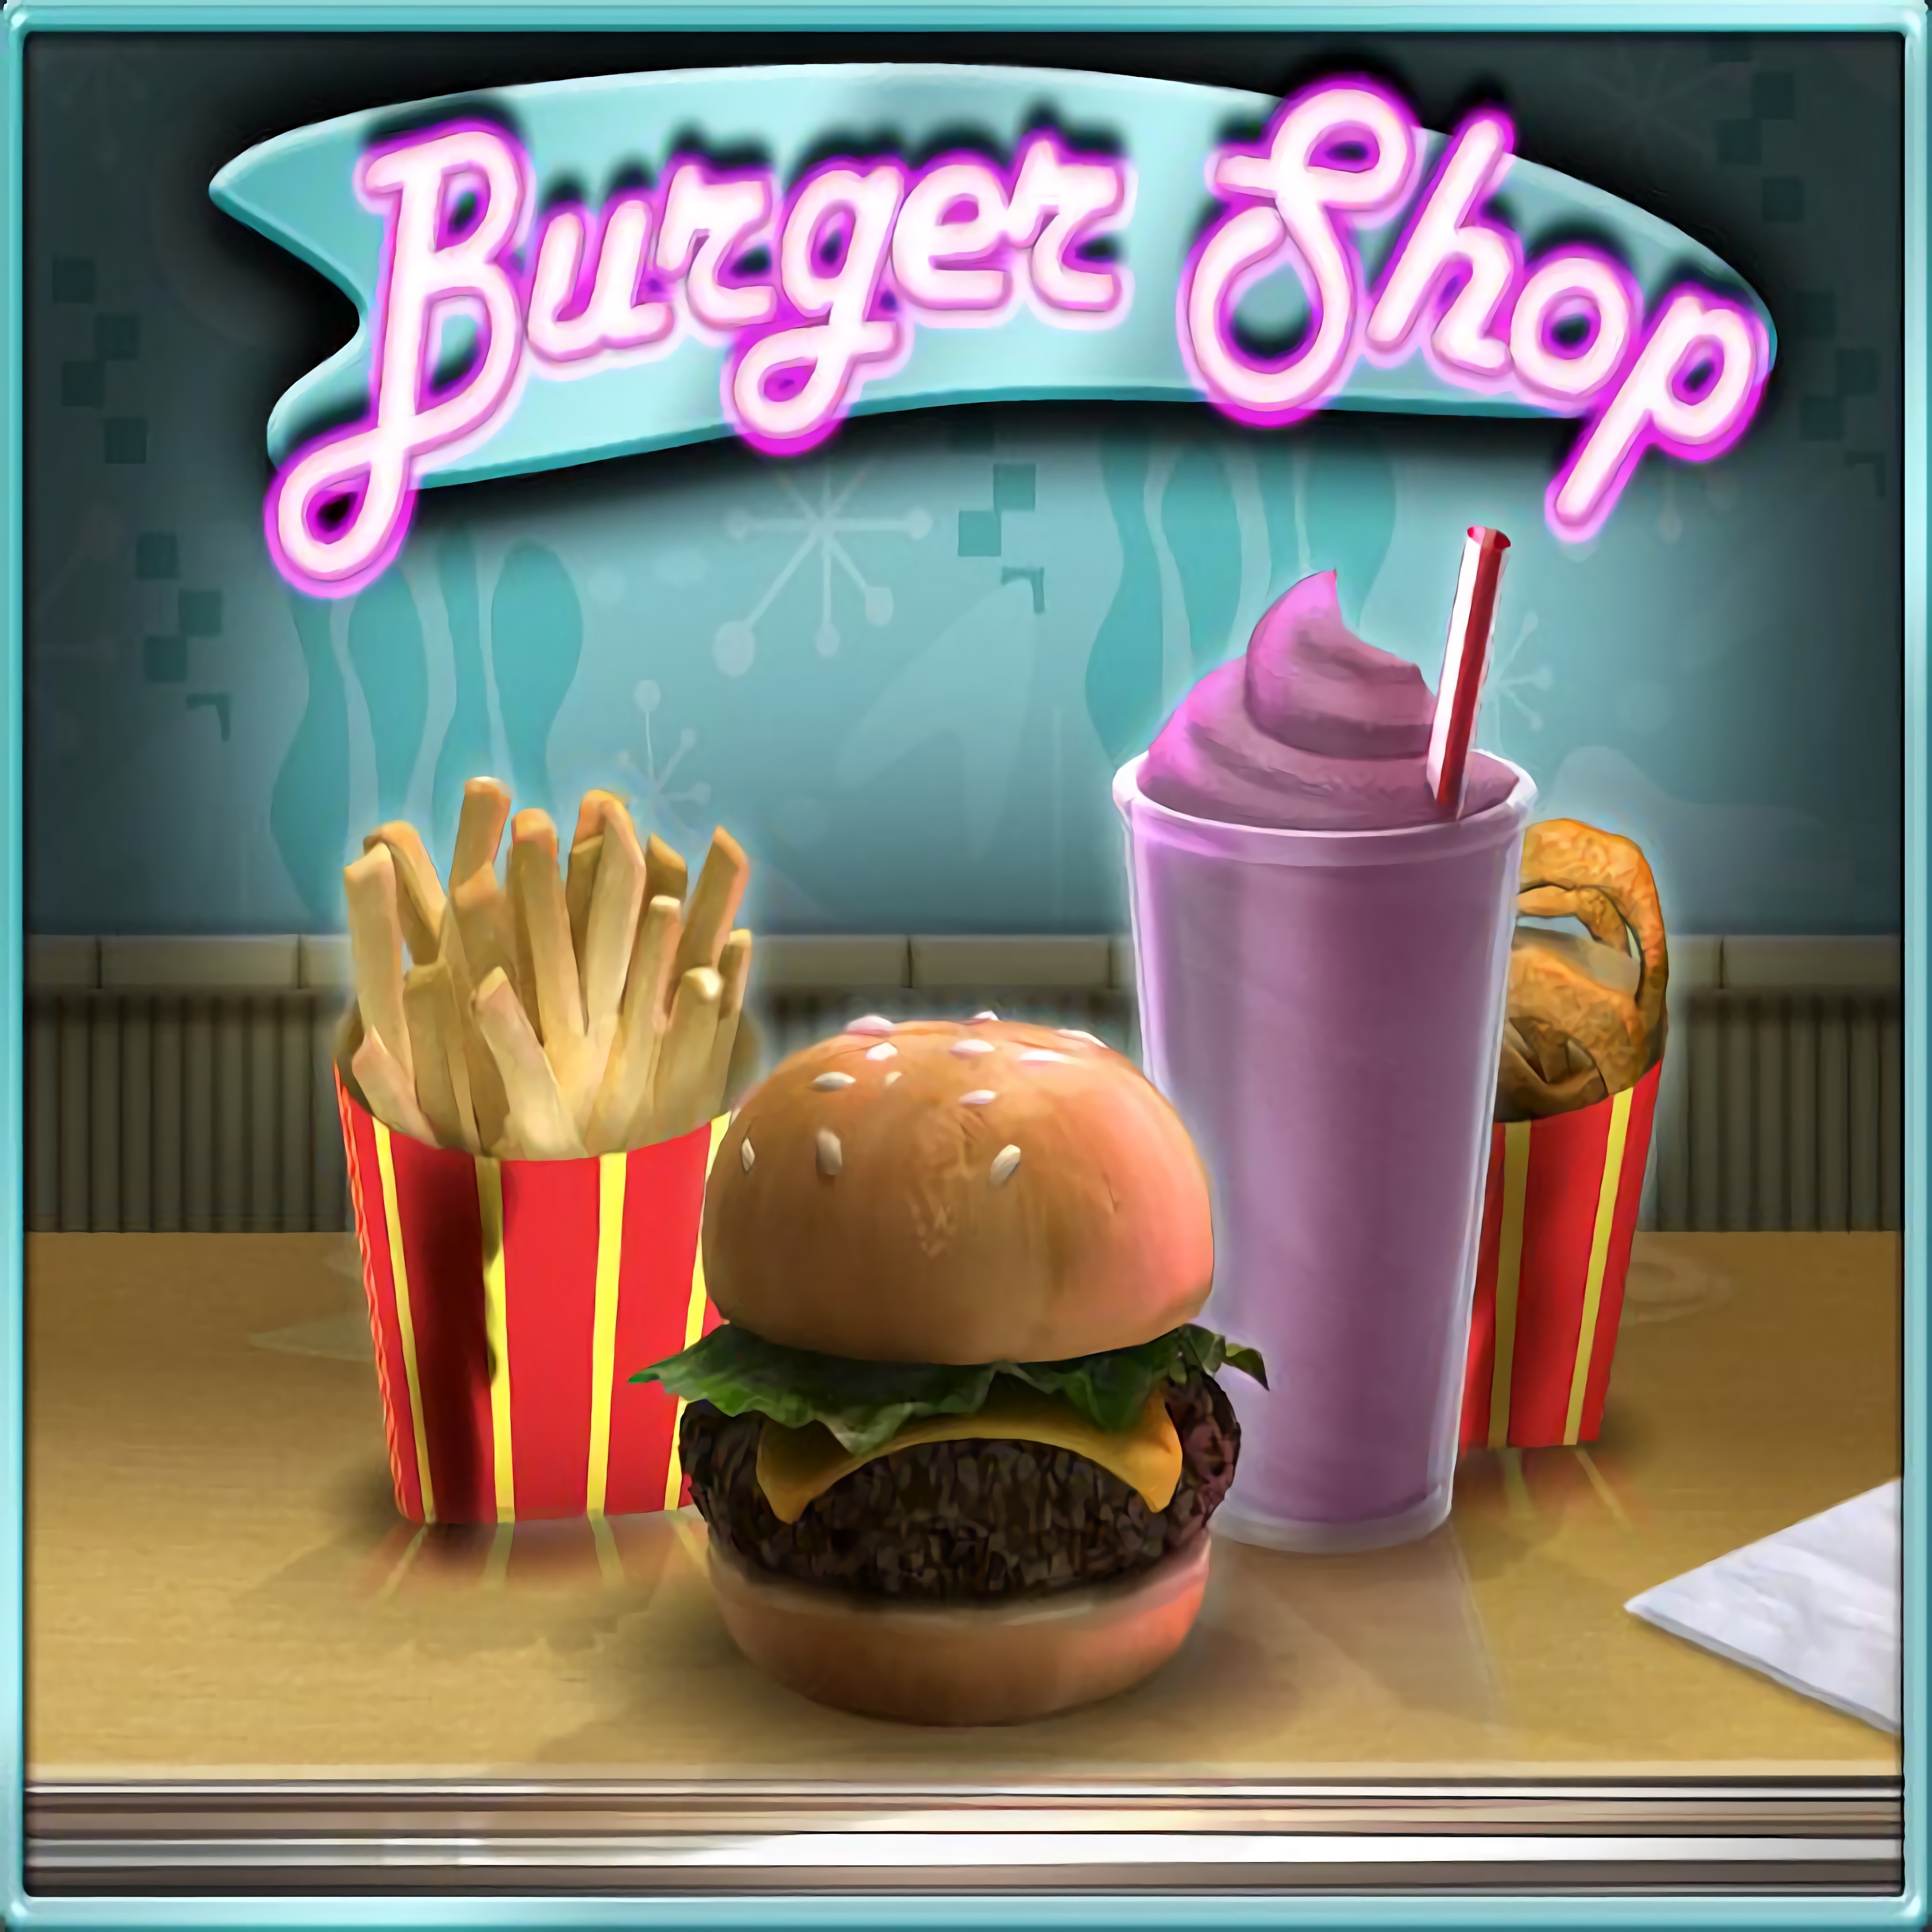 escape work burger shop game addiction